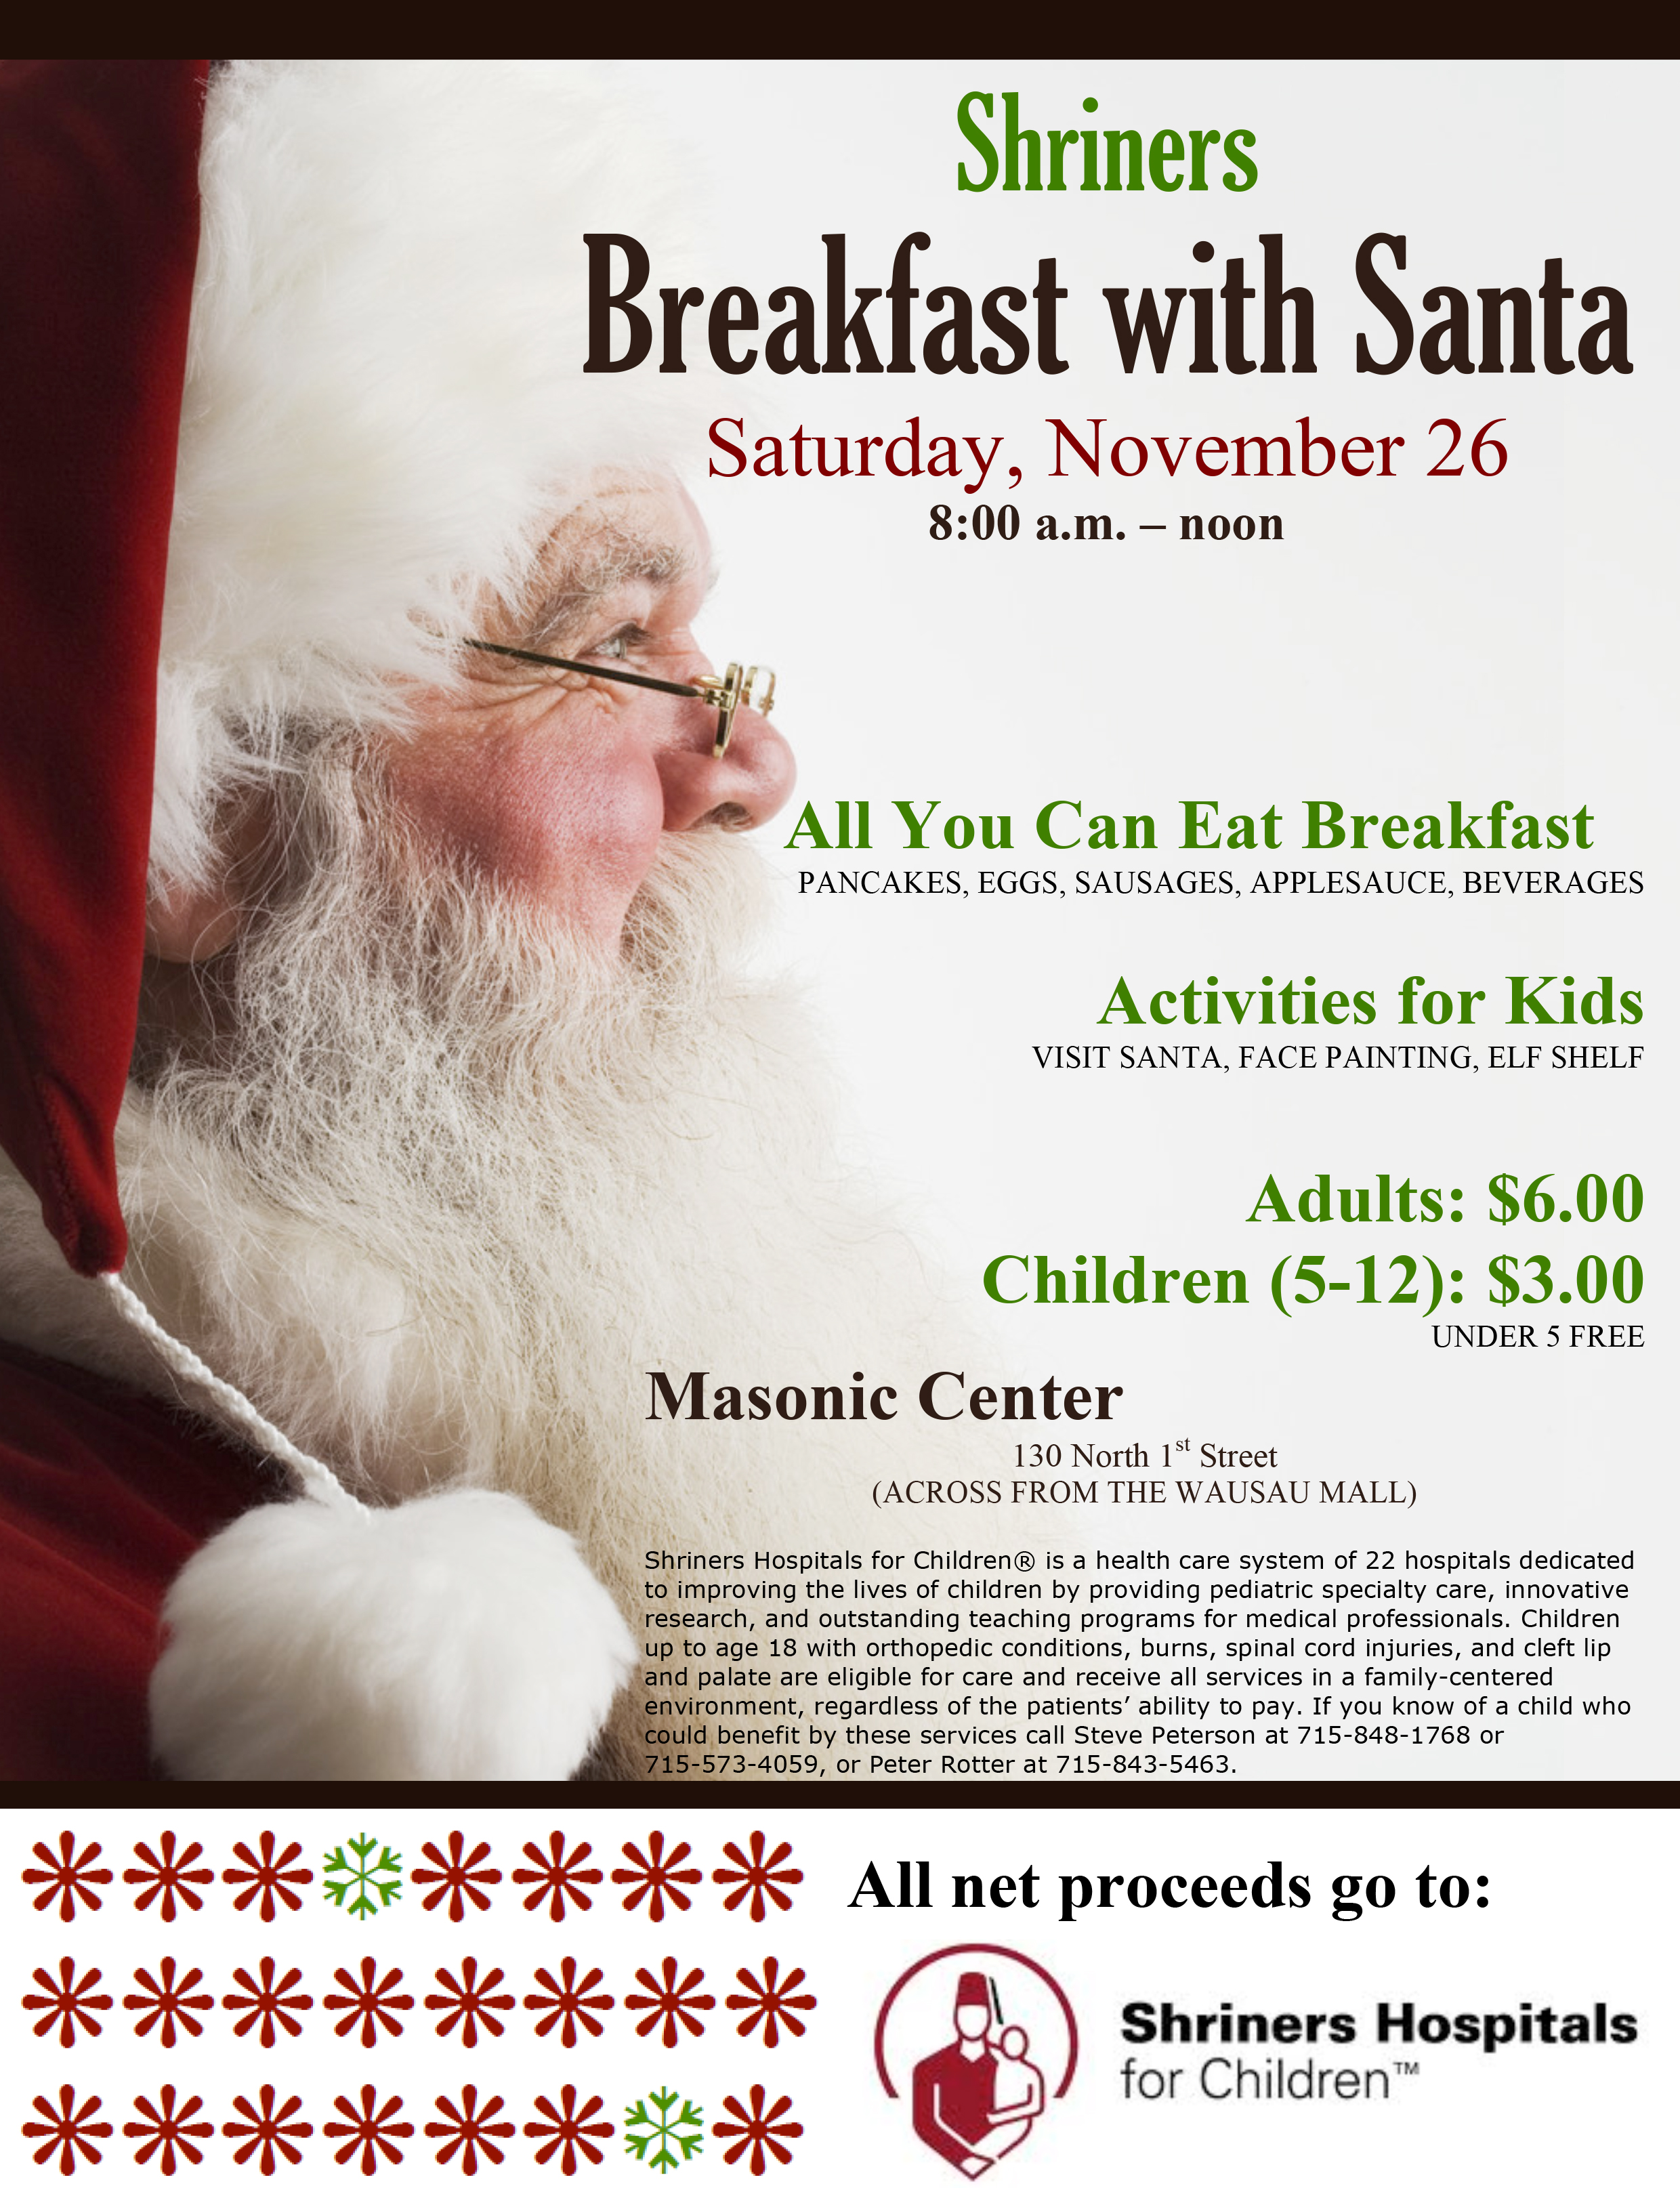 Microsoft Word - Breakfast with Santa Poster 2016.doc